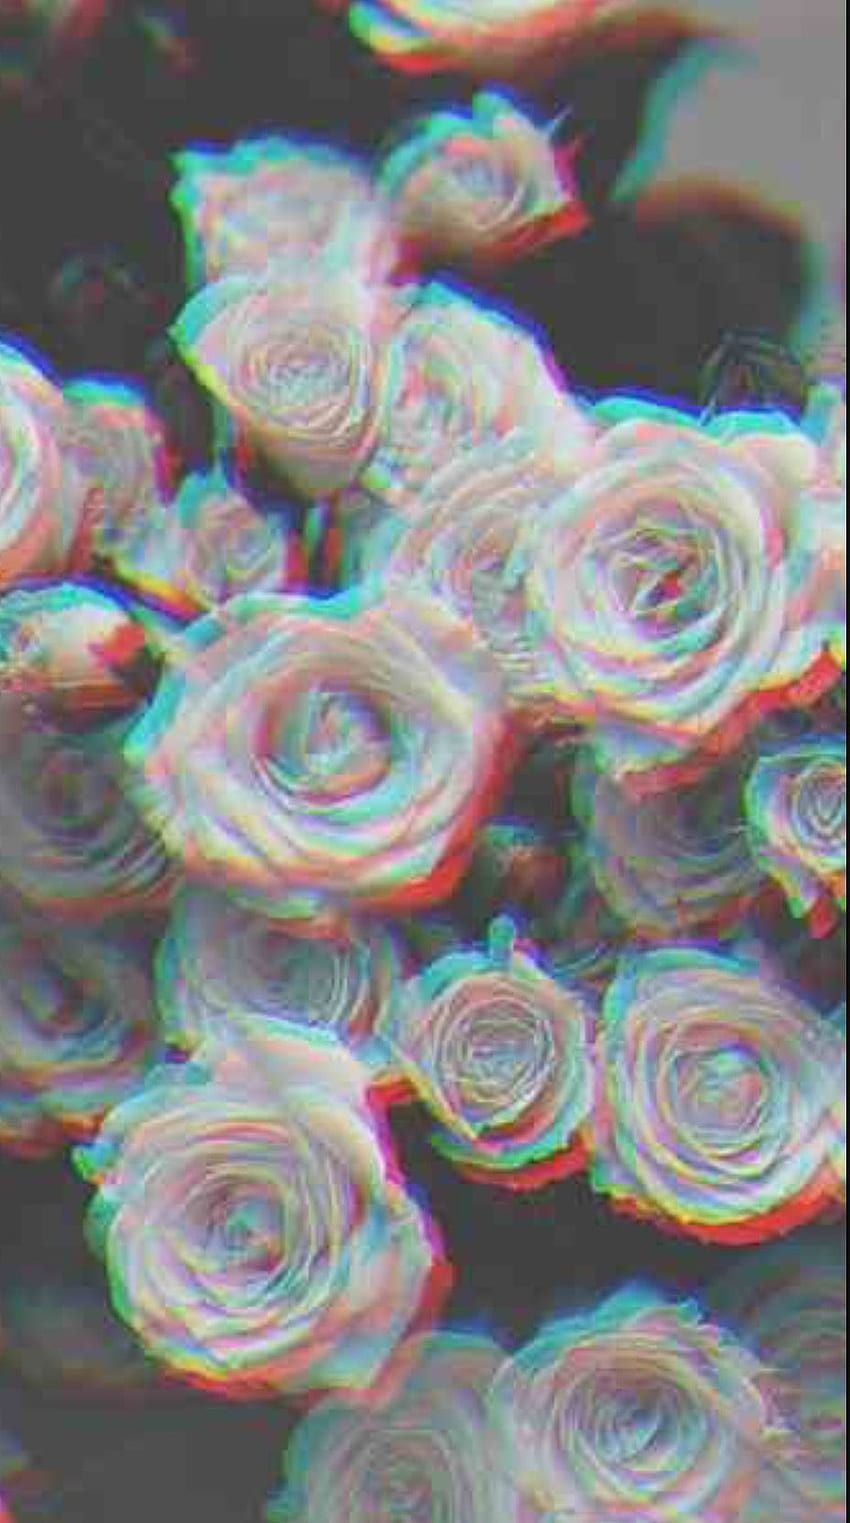 A picture of roses with a glitch effect - Glitch